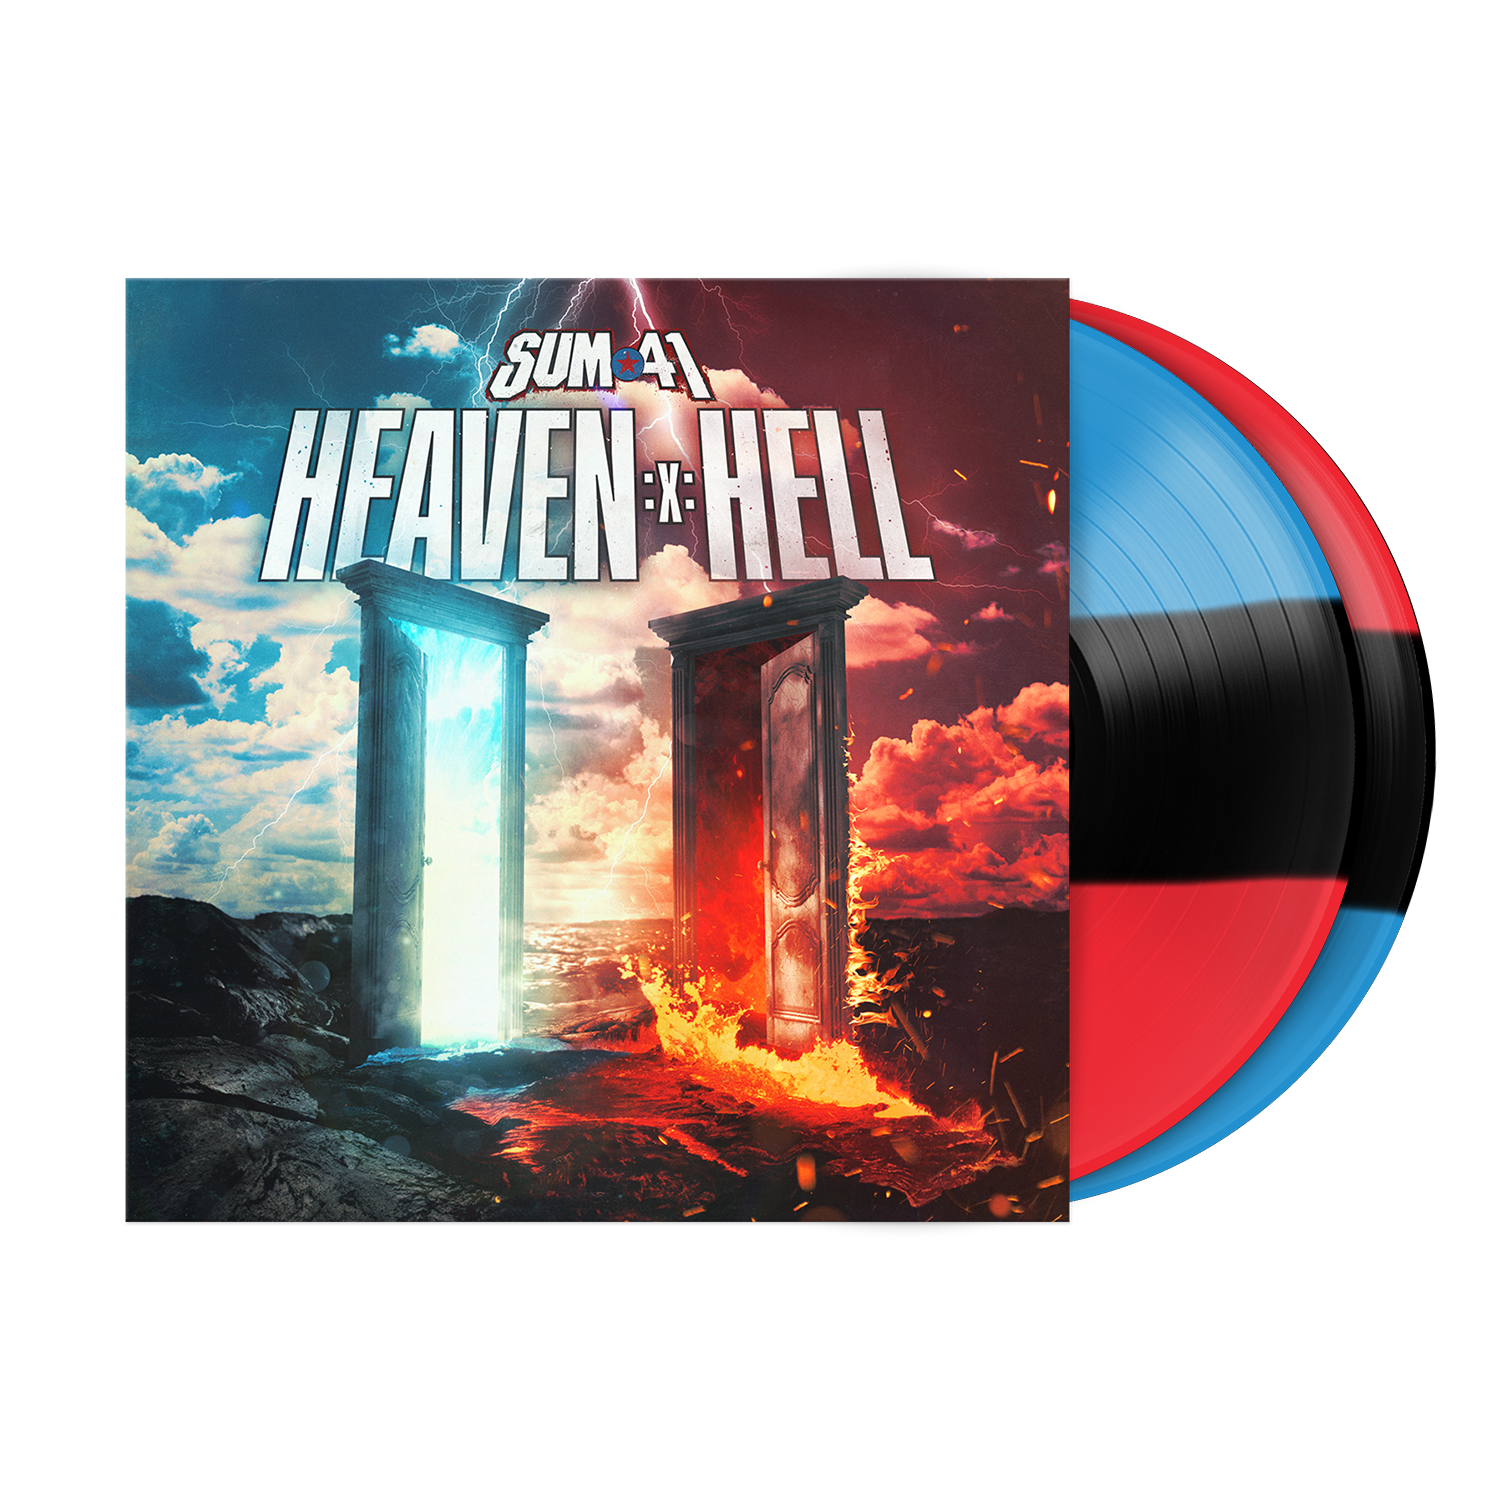 Sum 41 -  'Heaven :X: Hell' exclusive tri-stripes Vinyl LP